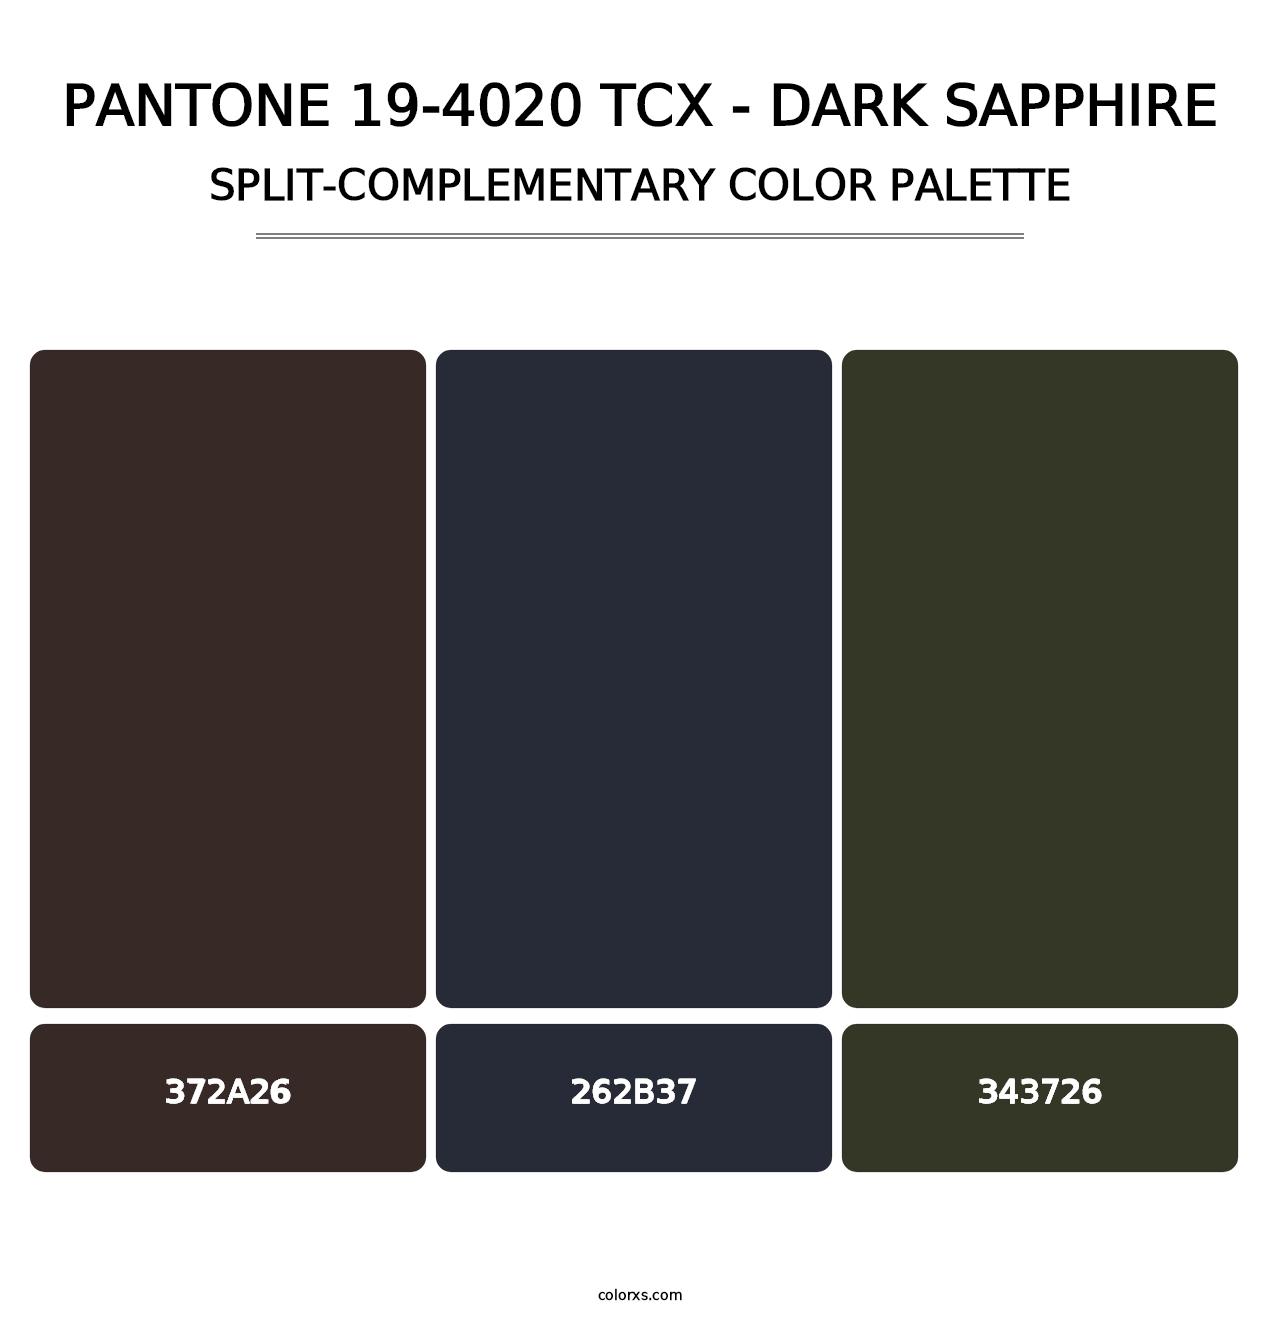 PANTONE 19-4020 TCX - Dark Sapphire - Split-Complementary Color Palette